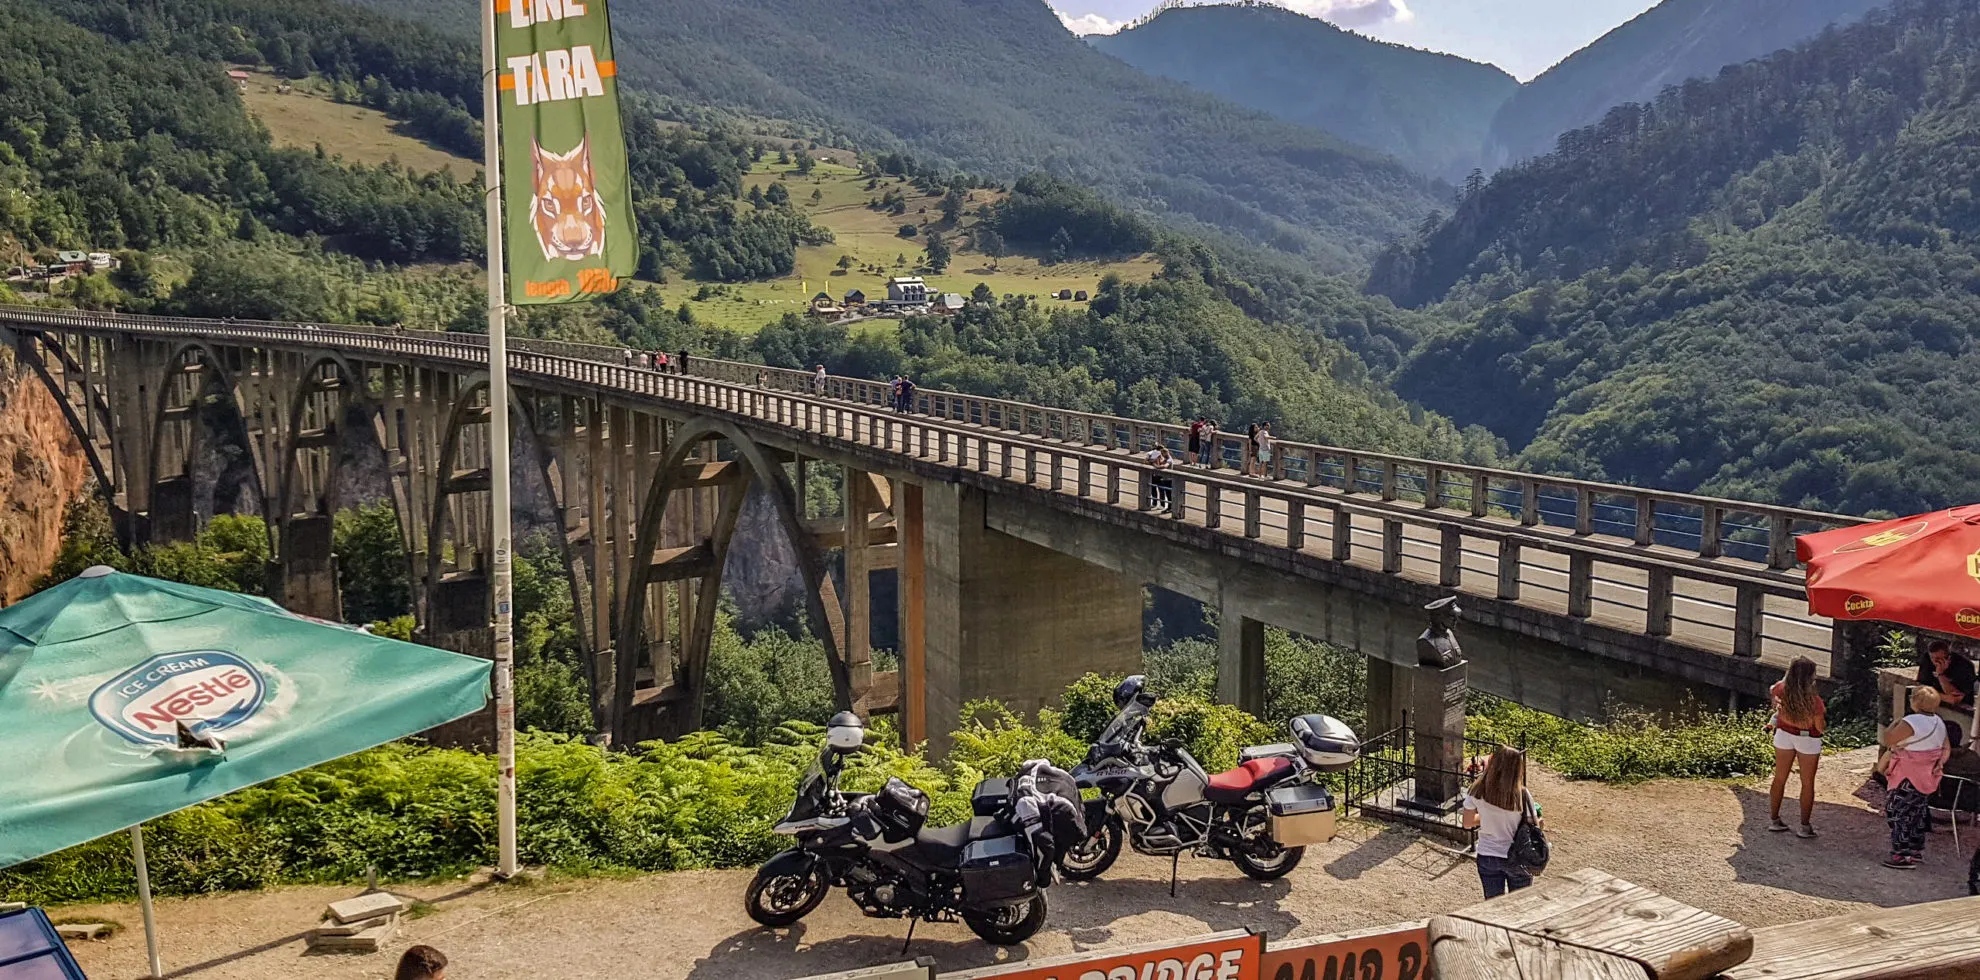 MotoGS WorldTours - Montenegro in Montenegro, Europe | Motorcycles - Rated 0.9